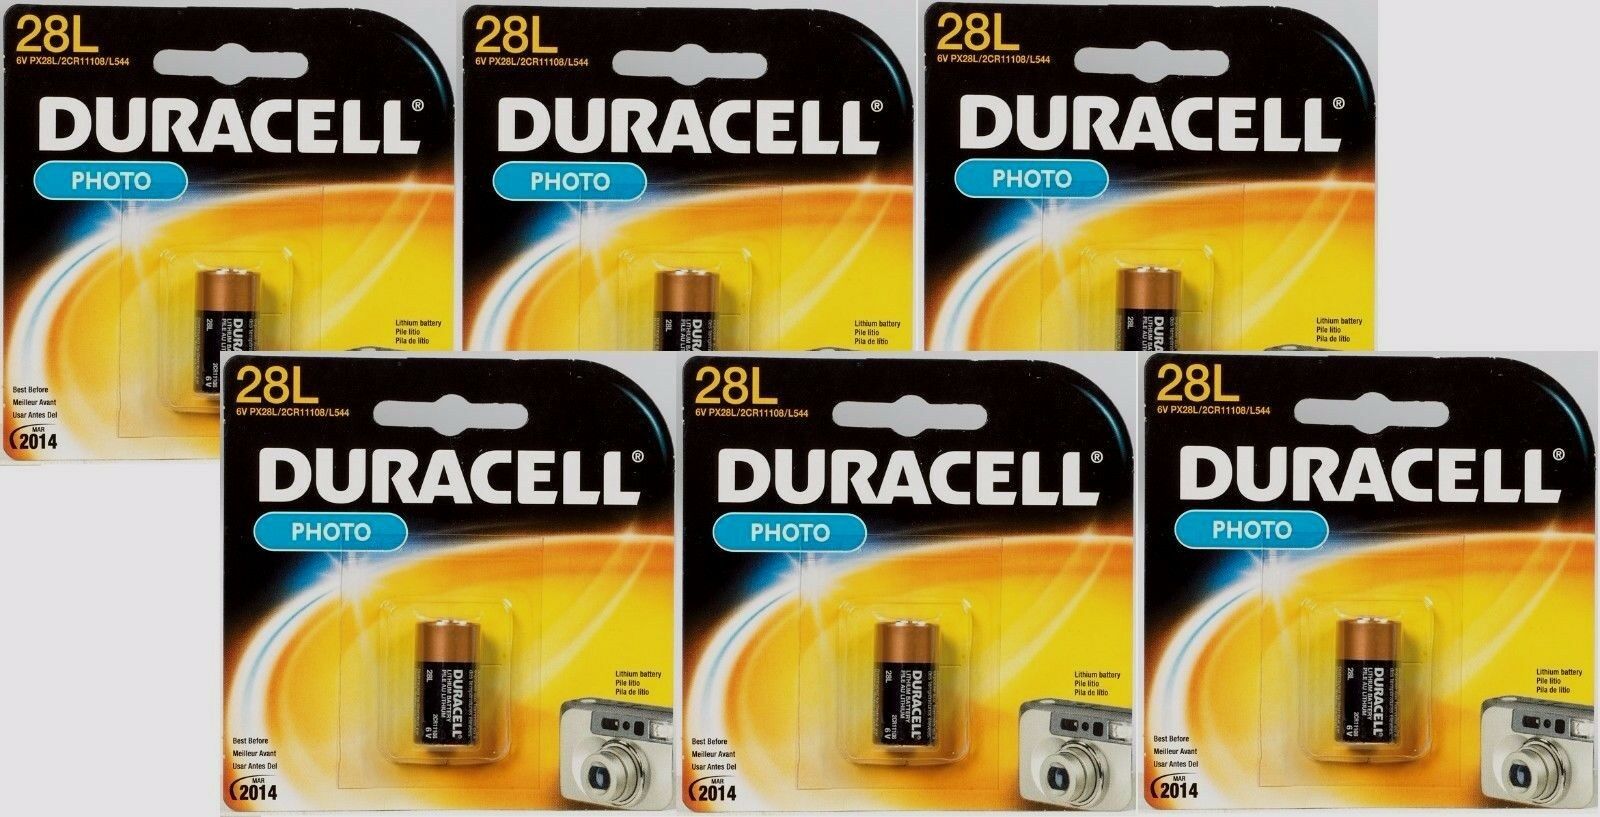 6 ~ DURACELL 6 volt Lithium Photo Camera Battery 28L, 2CR11108, L544, PX28L